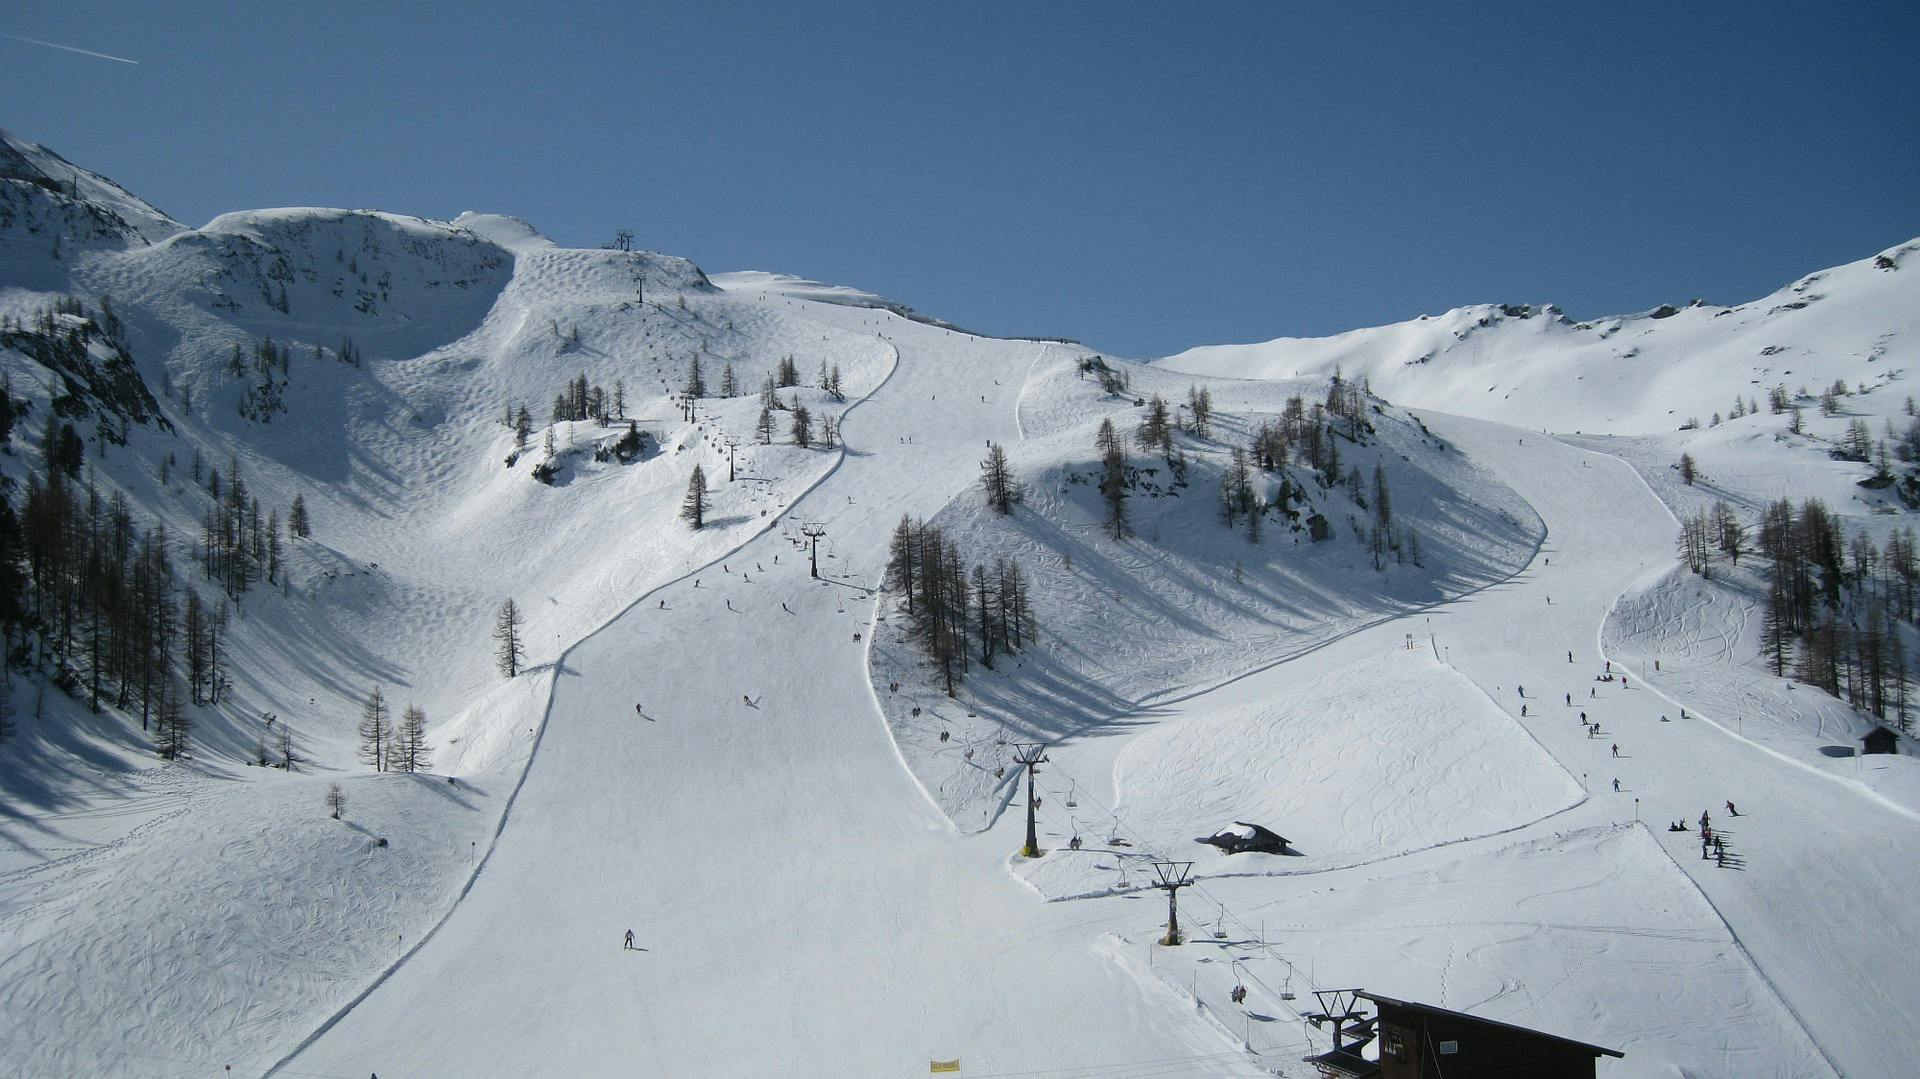 ski-slope-g92c4b531a-1920